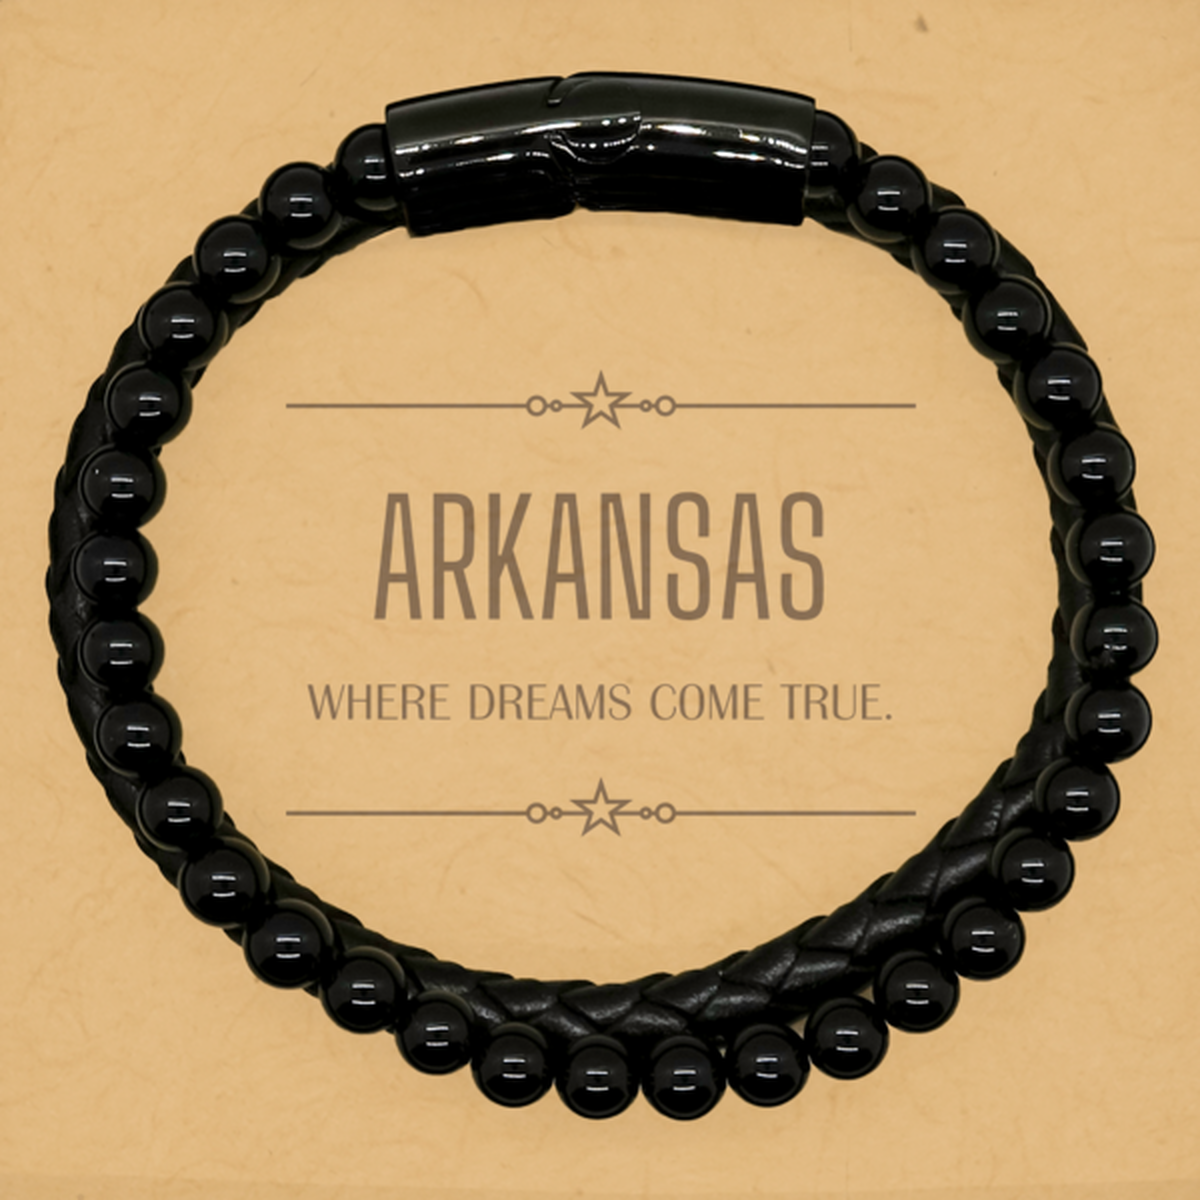 Love Arkansas State Stone Leather Bracelets, Arkansas Where dreams come true, Birthday Inspirational Gifts For Arkansas Men, Women, Friends